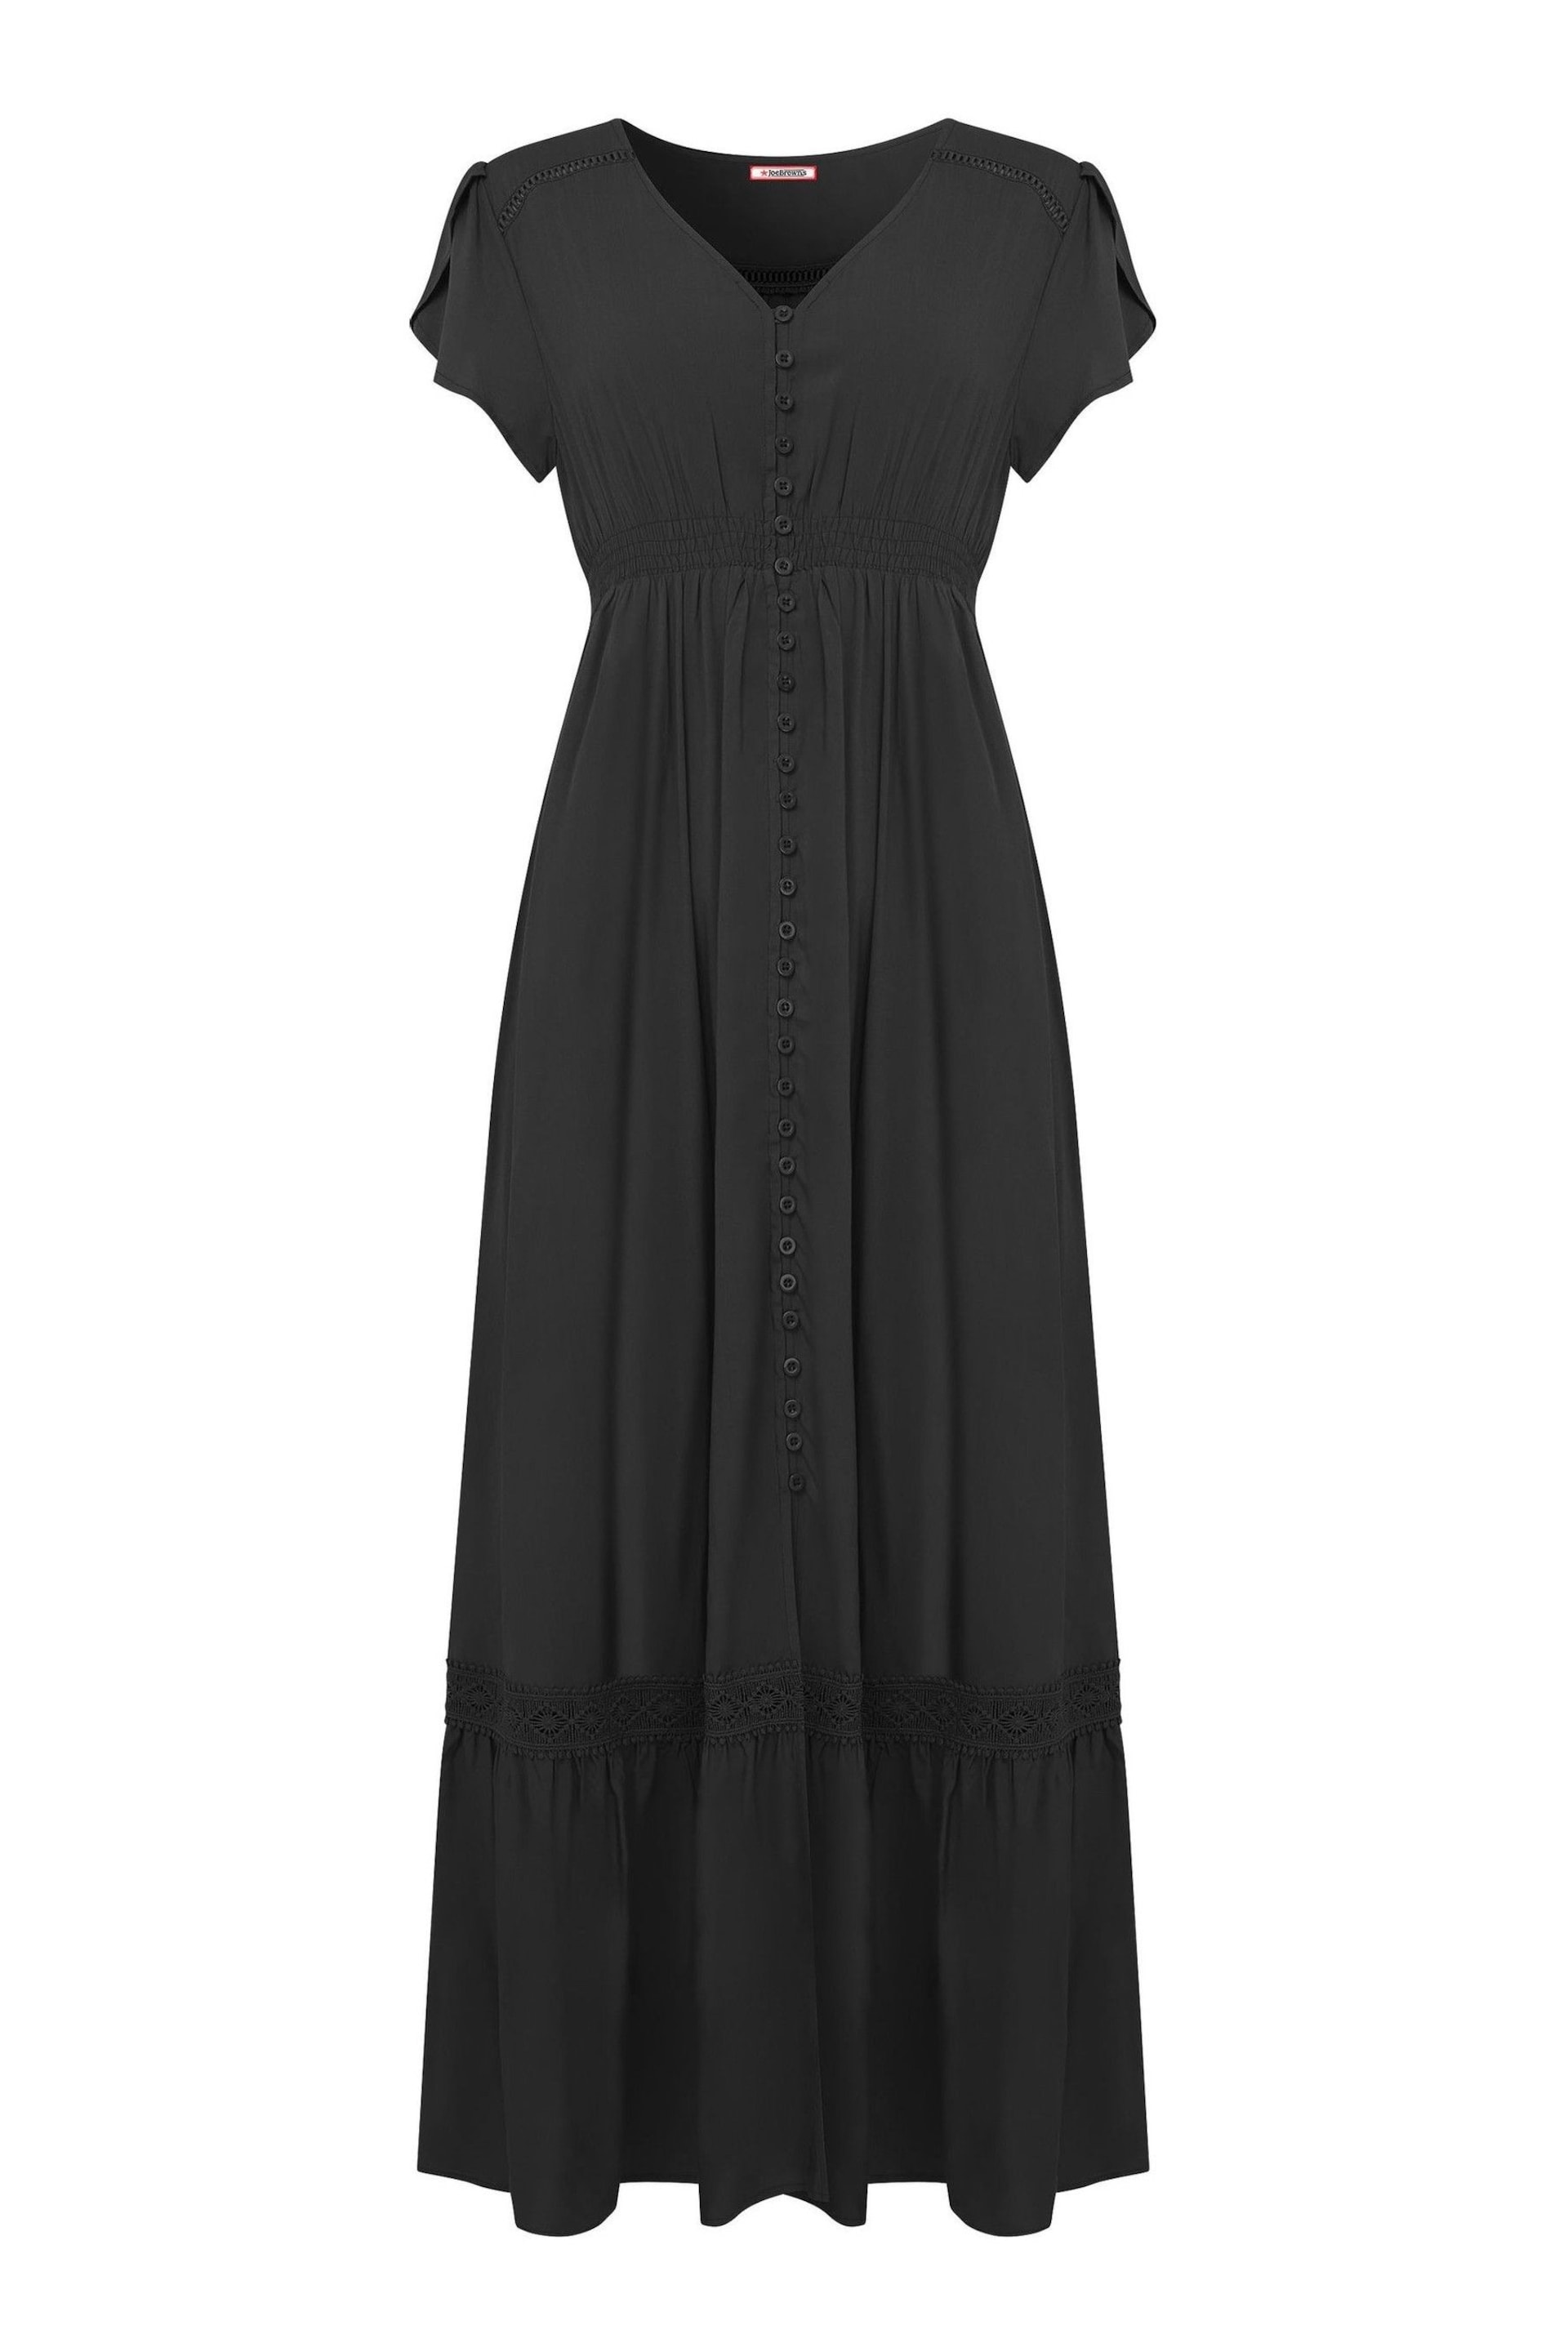 Joe Browns Black Petite Colourblock Boho Maxi Dress - Image 4 of 4